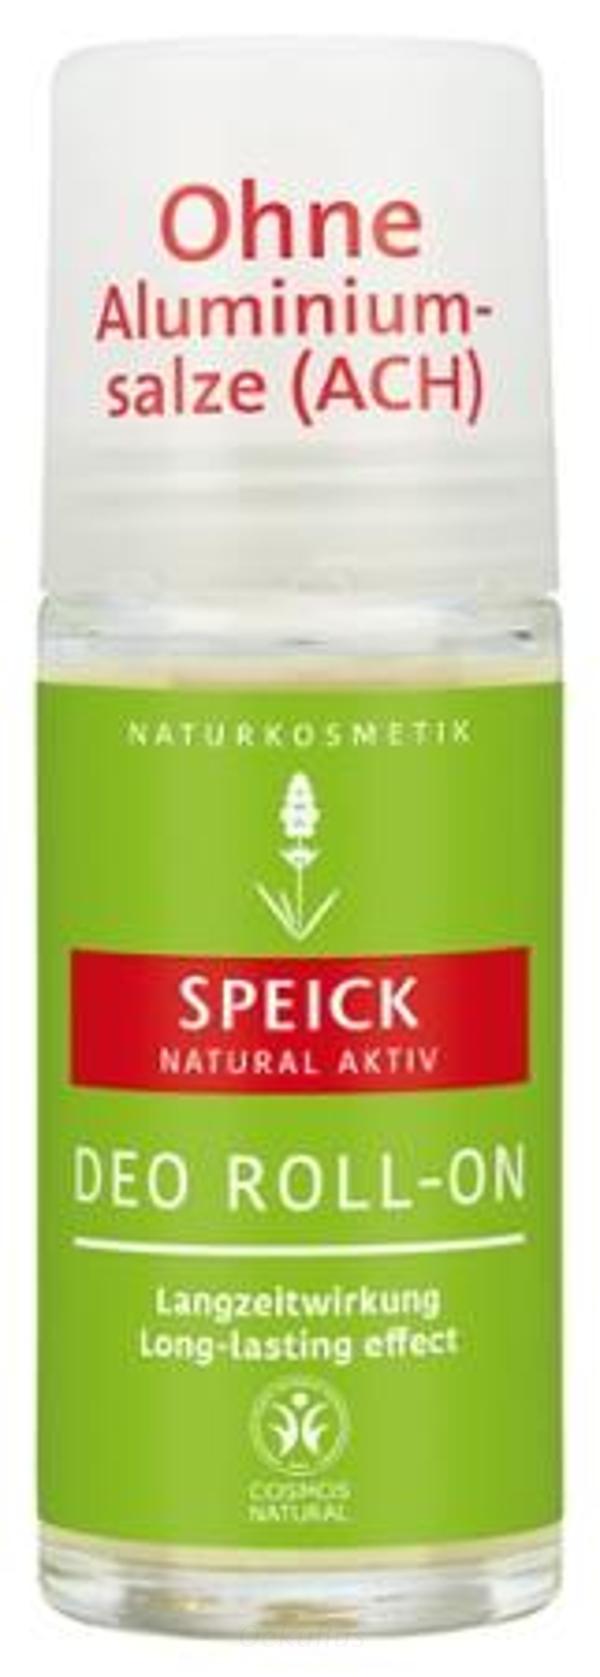 Produktfoto zu Speick Natural Aktiv Deo Roll-on